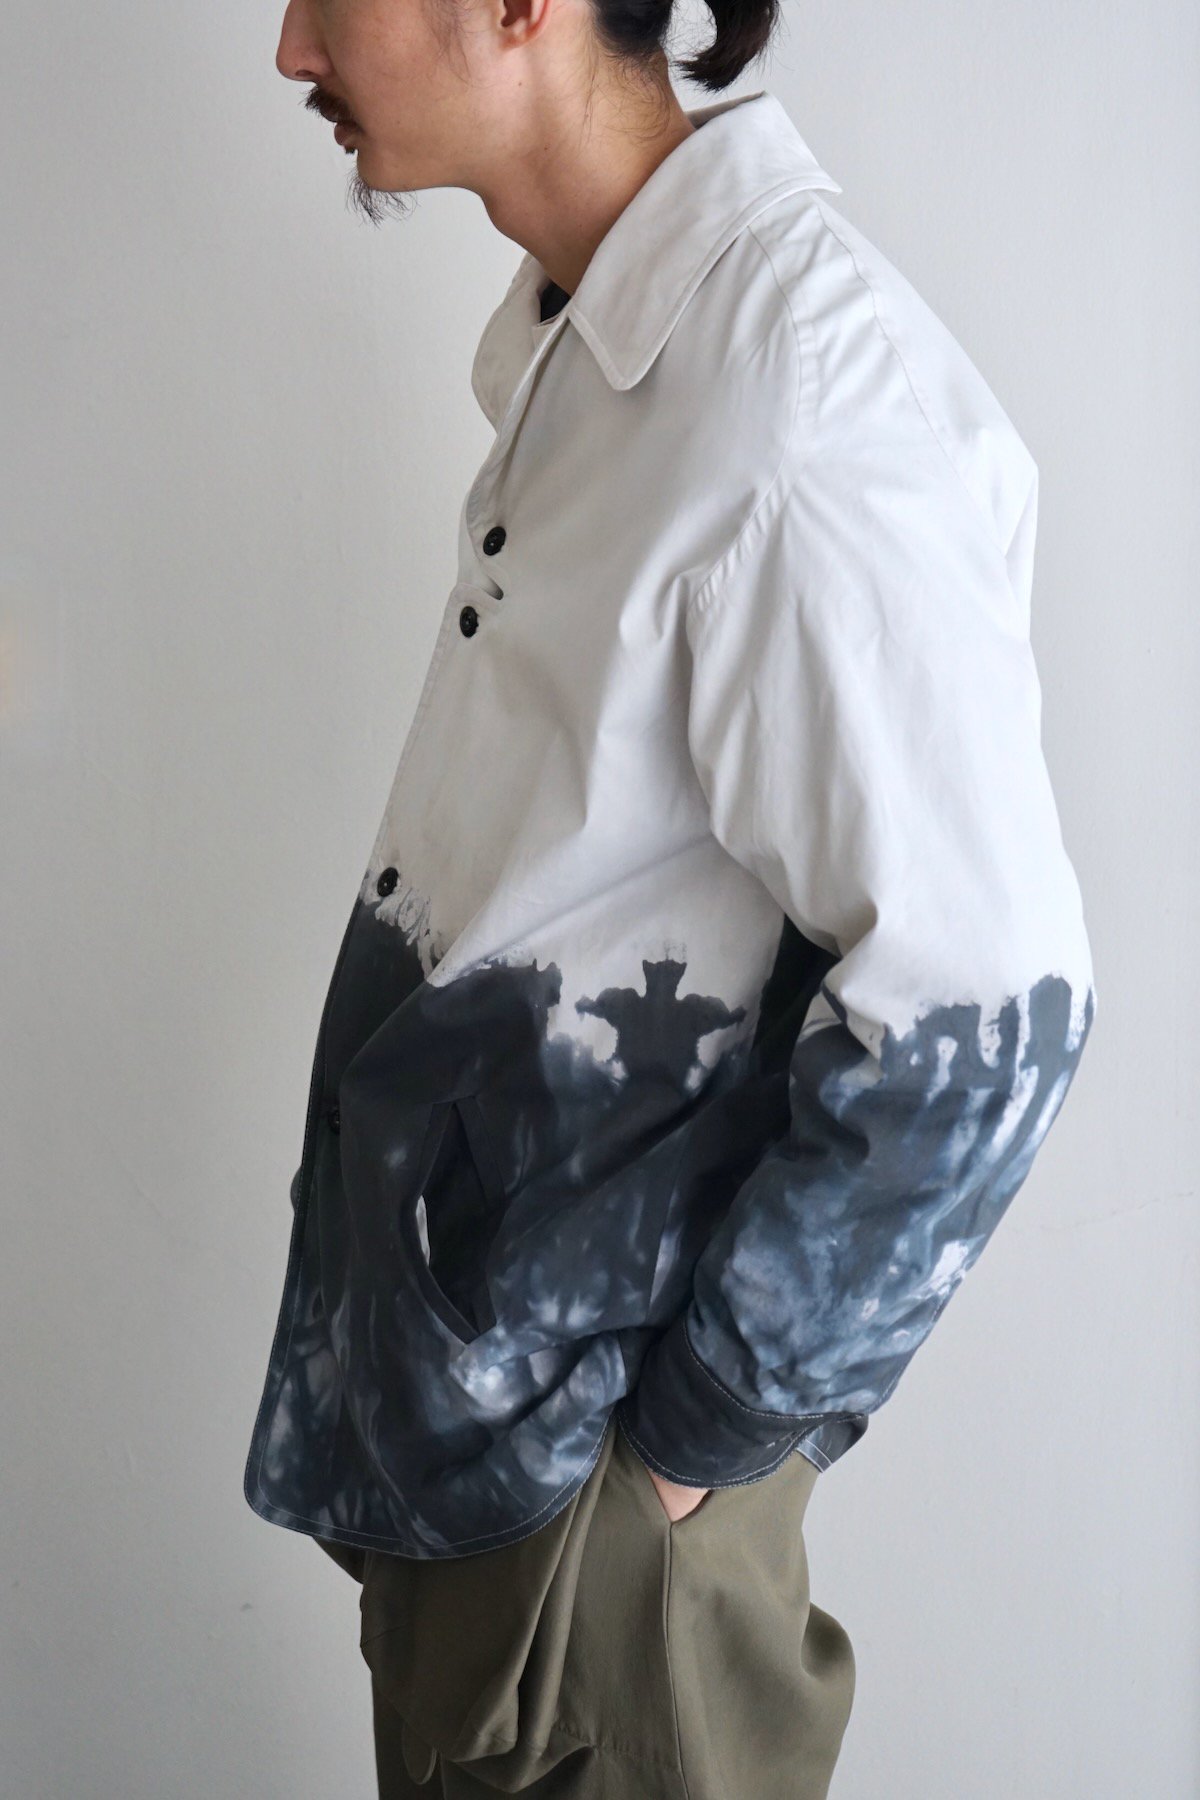 MAI GIDAH / Padded Overshirt with pocket, raglan-sleeves / Off-white, Navy-grey